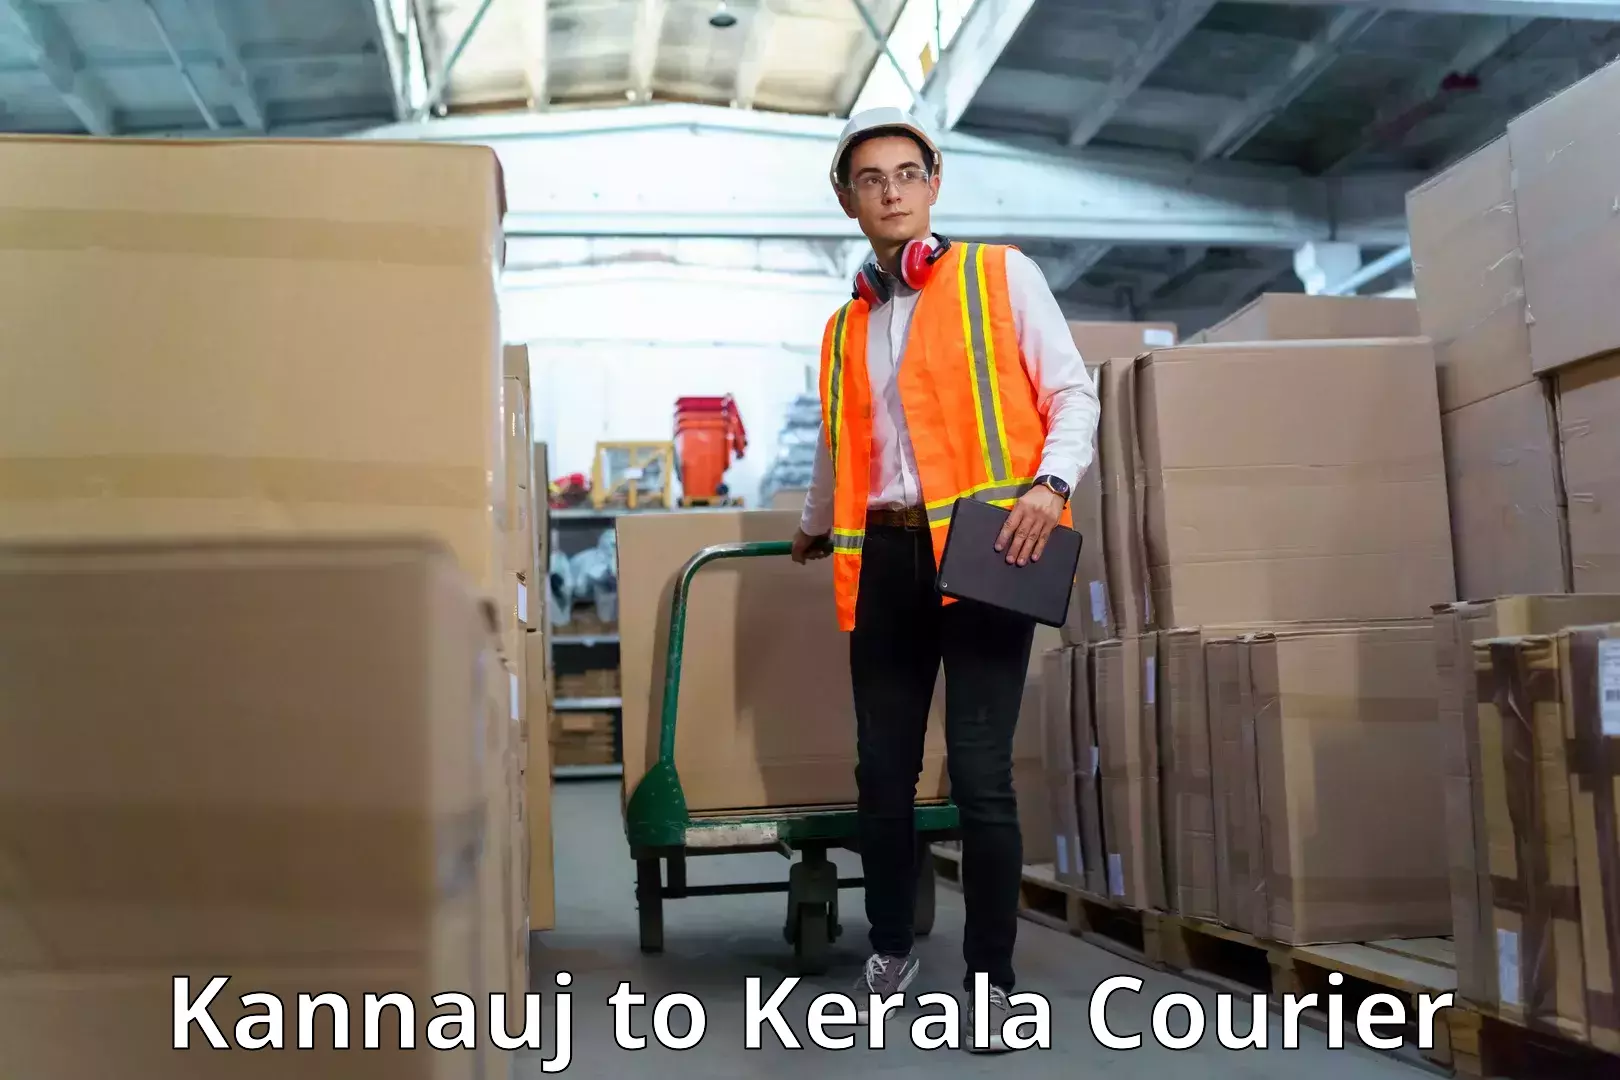 Courier service innovation Kannauj to Guruvayoor